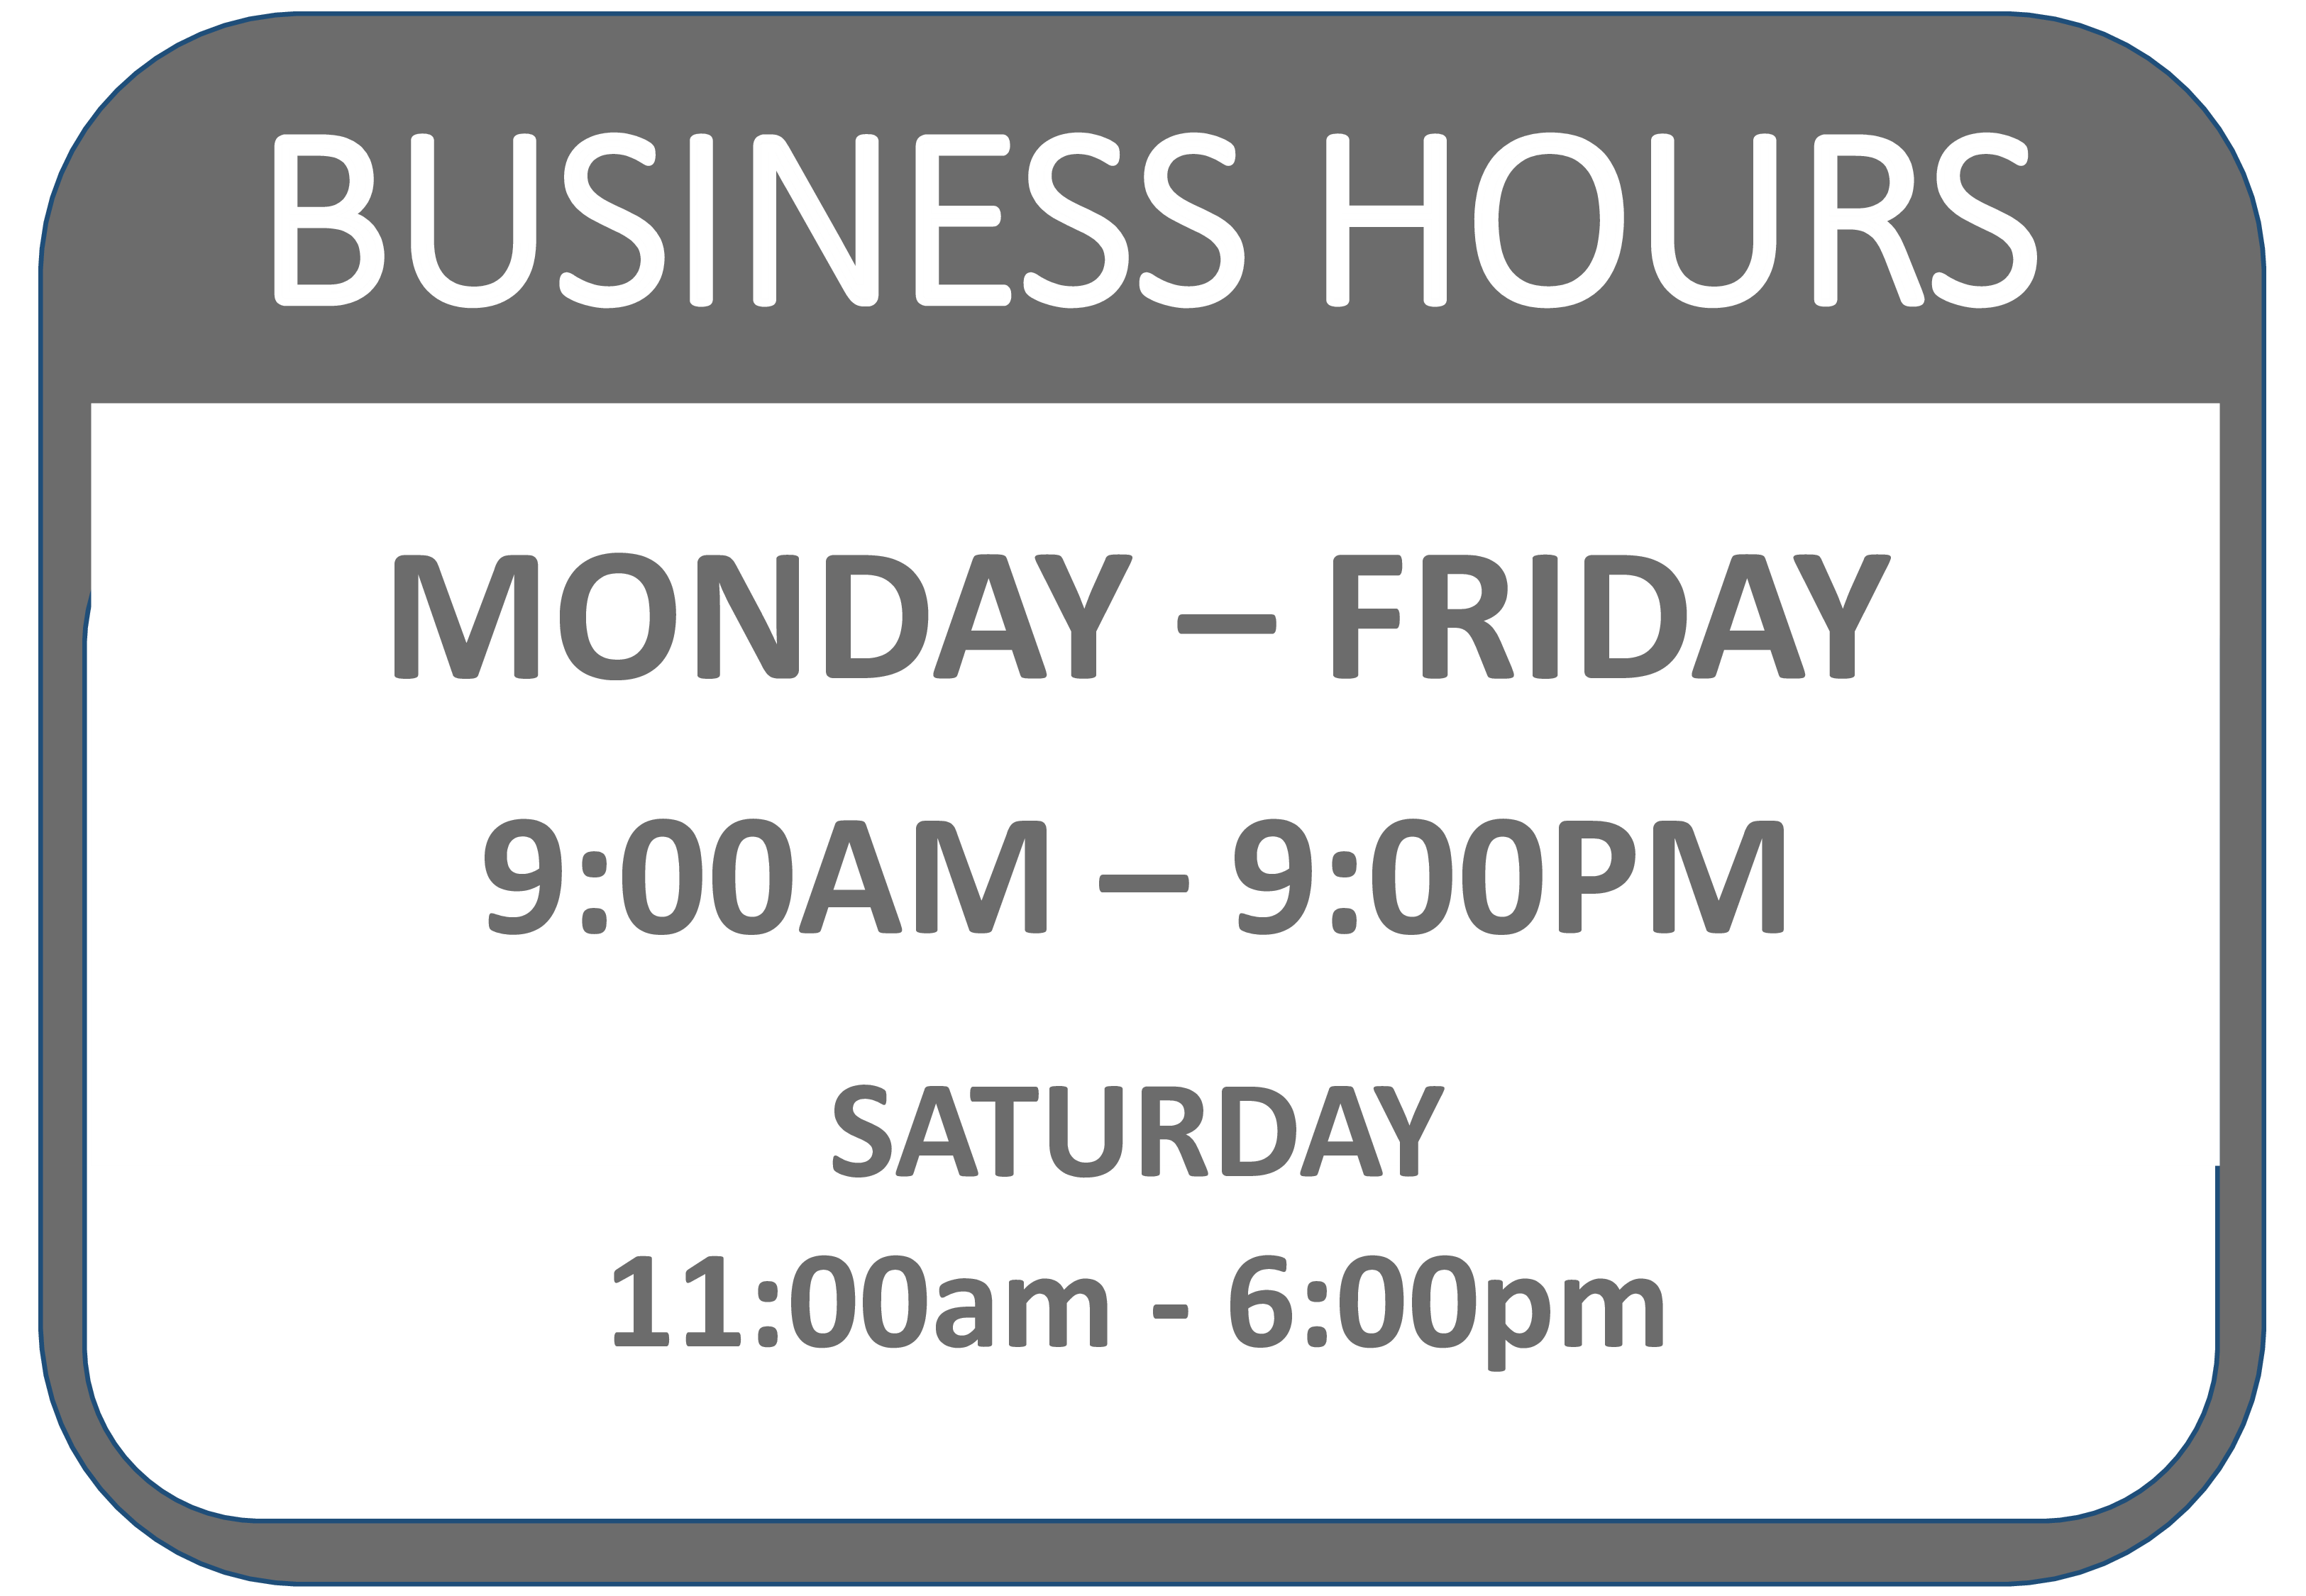 Business Hours Signage Templates at allbusinesstemplates com